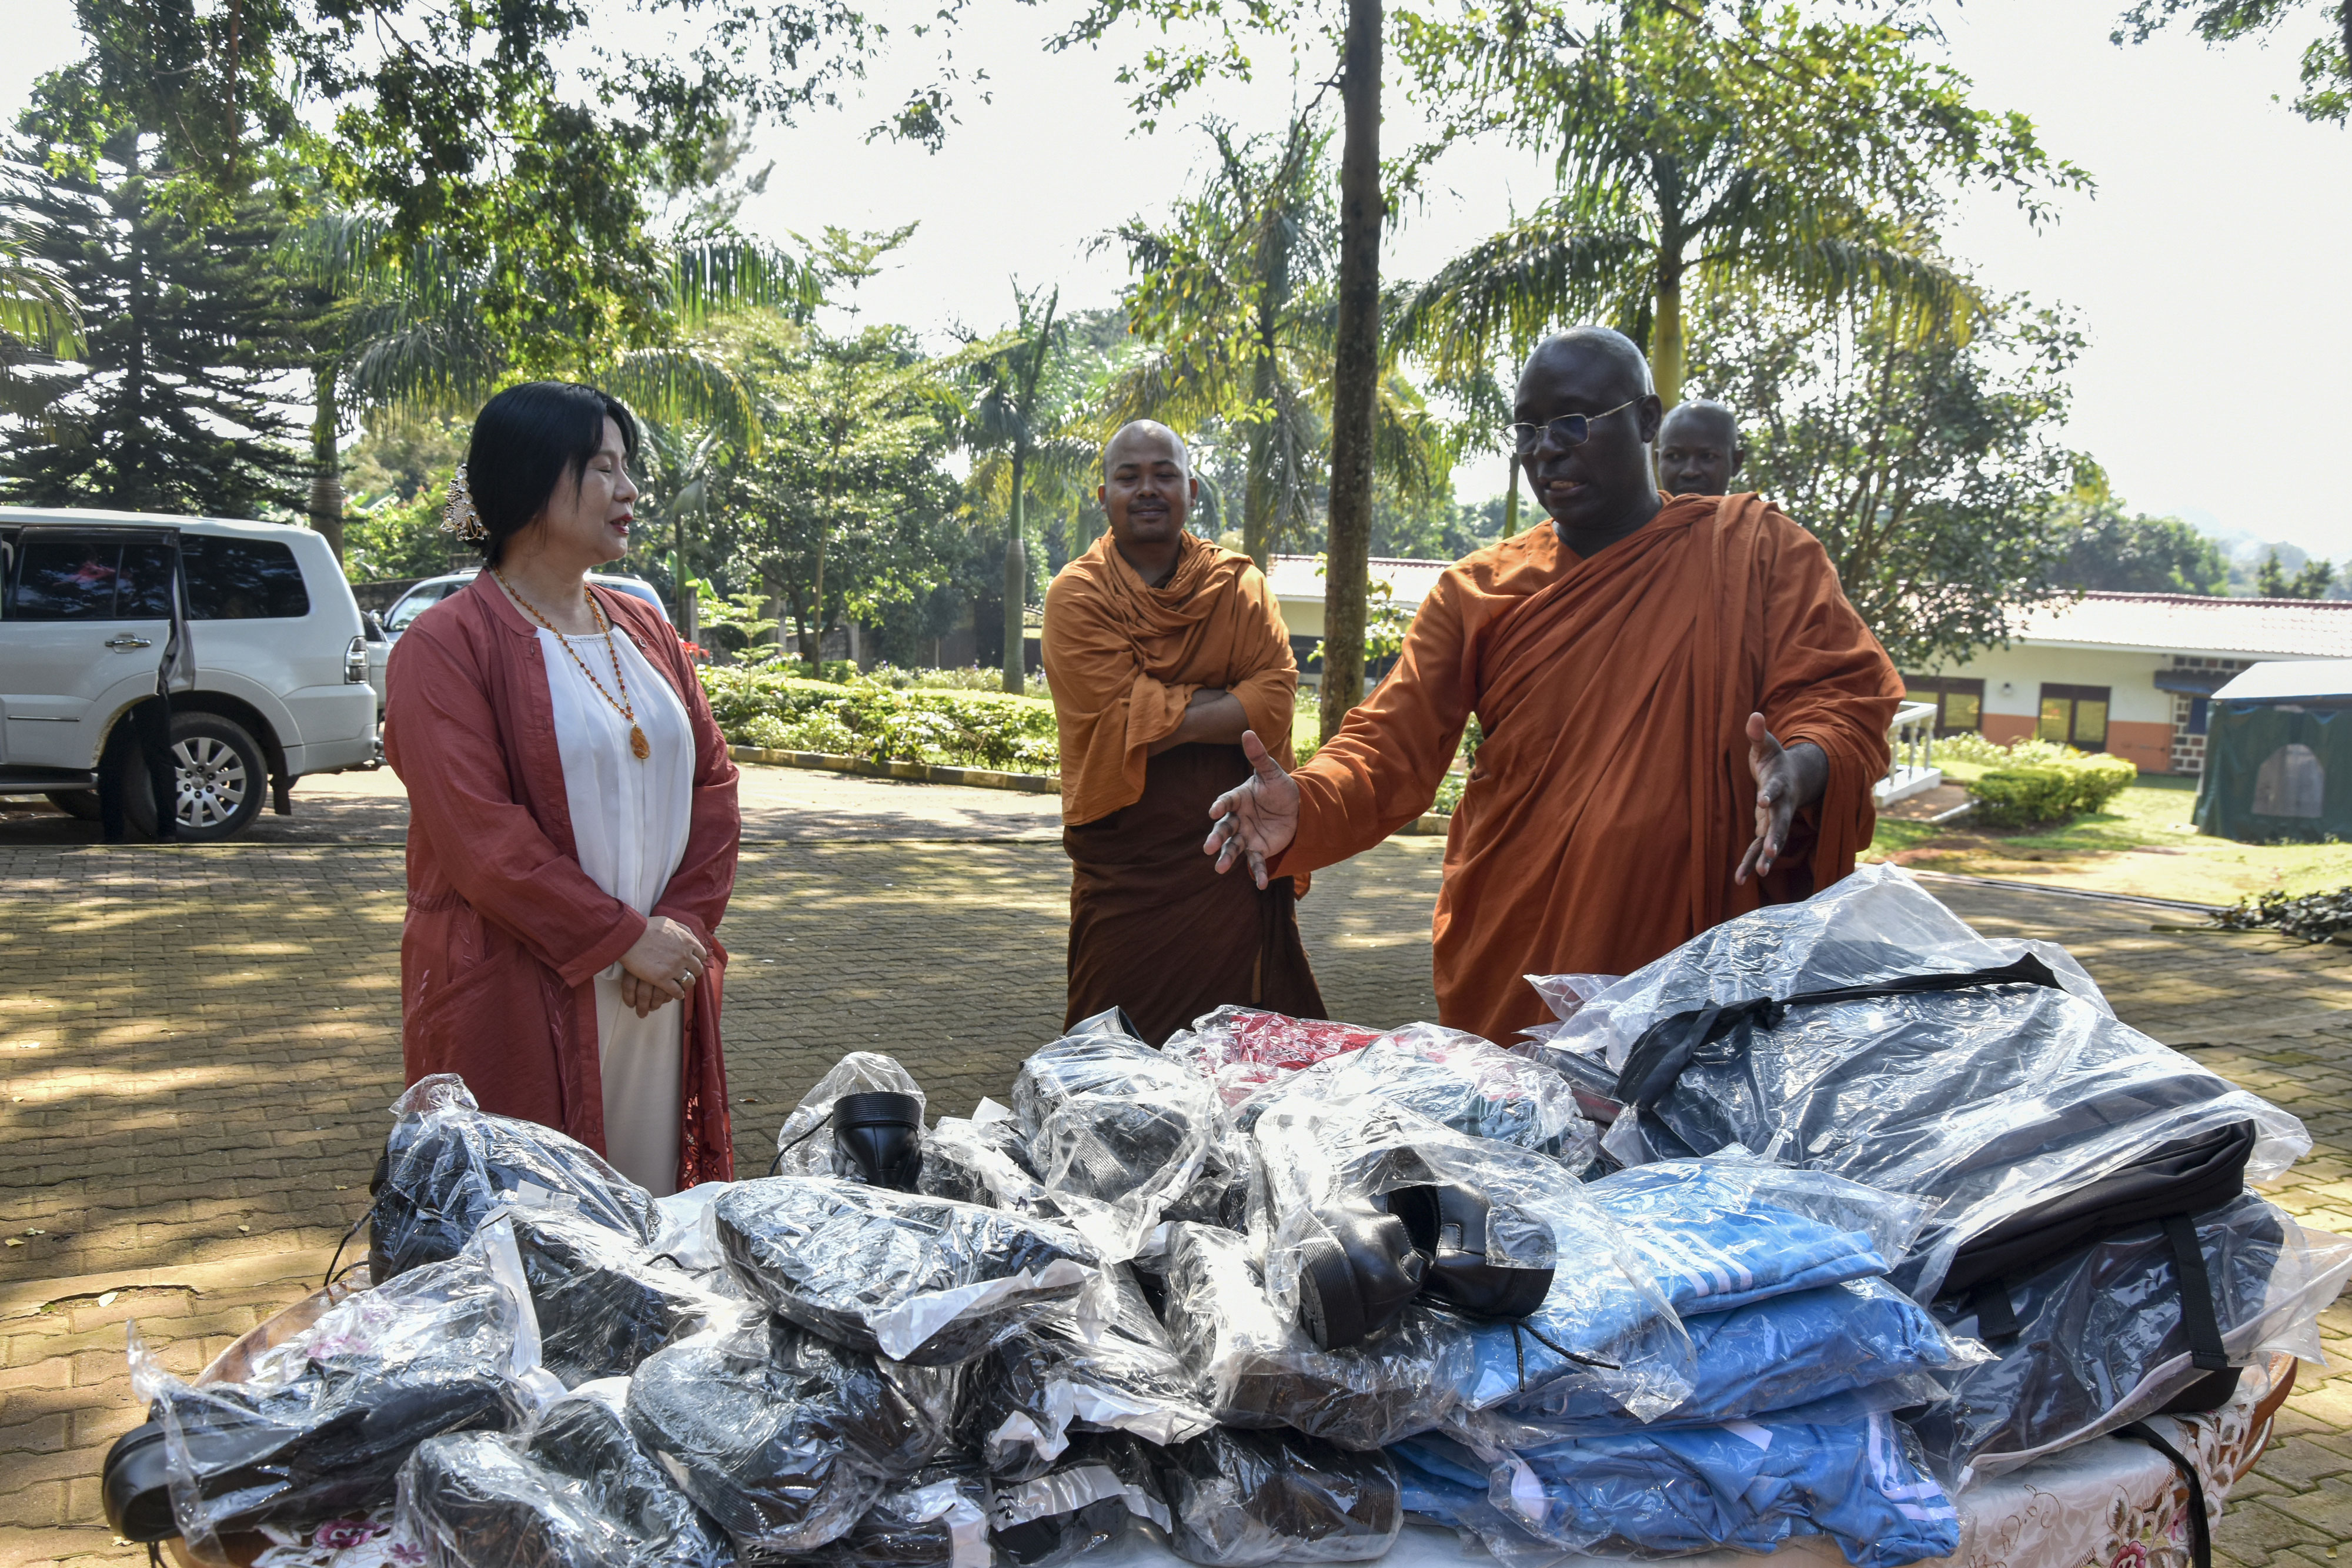 A Day of Joy at the Uganda Buddhist Centre